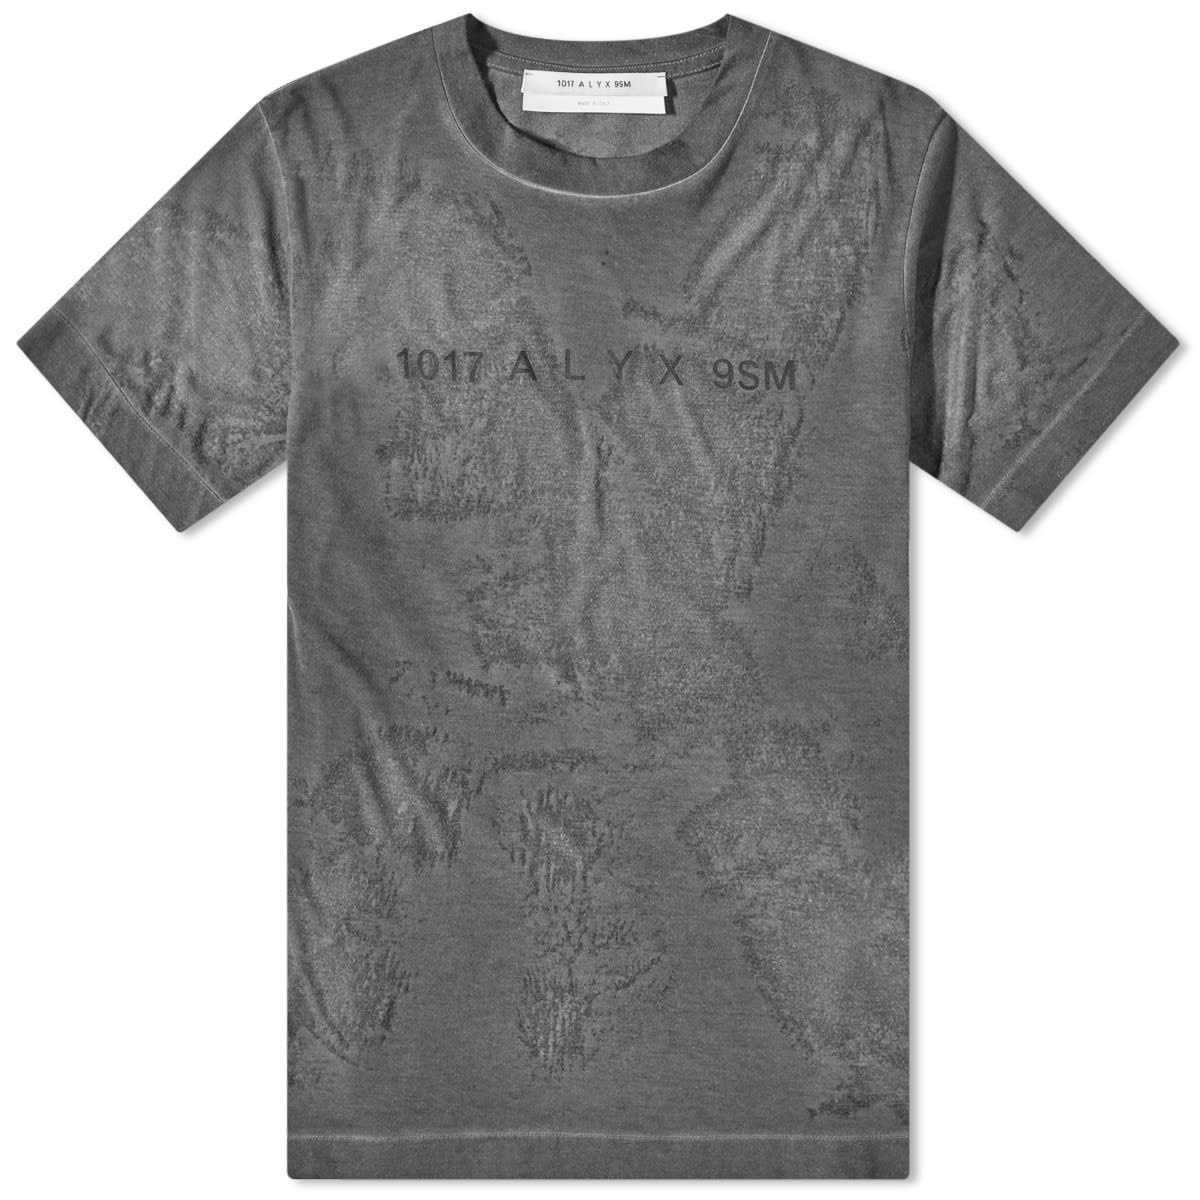 1017 ALYX 9SM Transluscent Graphic T-Shirt - 1